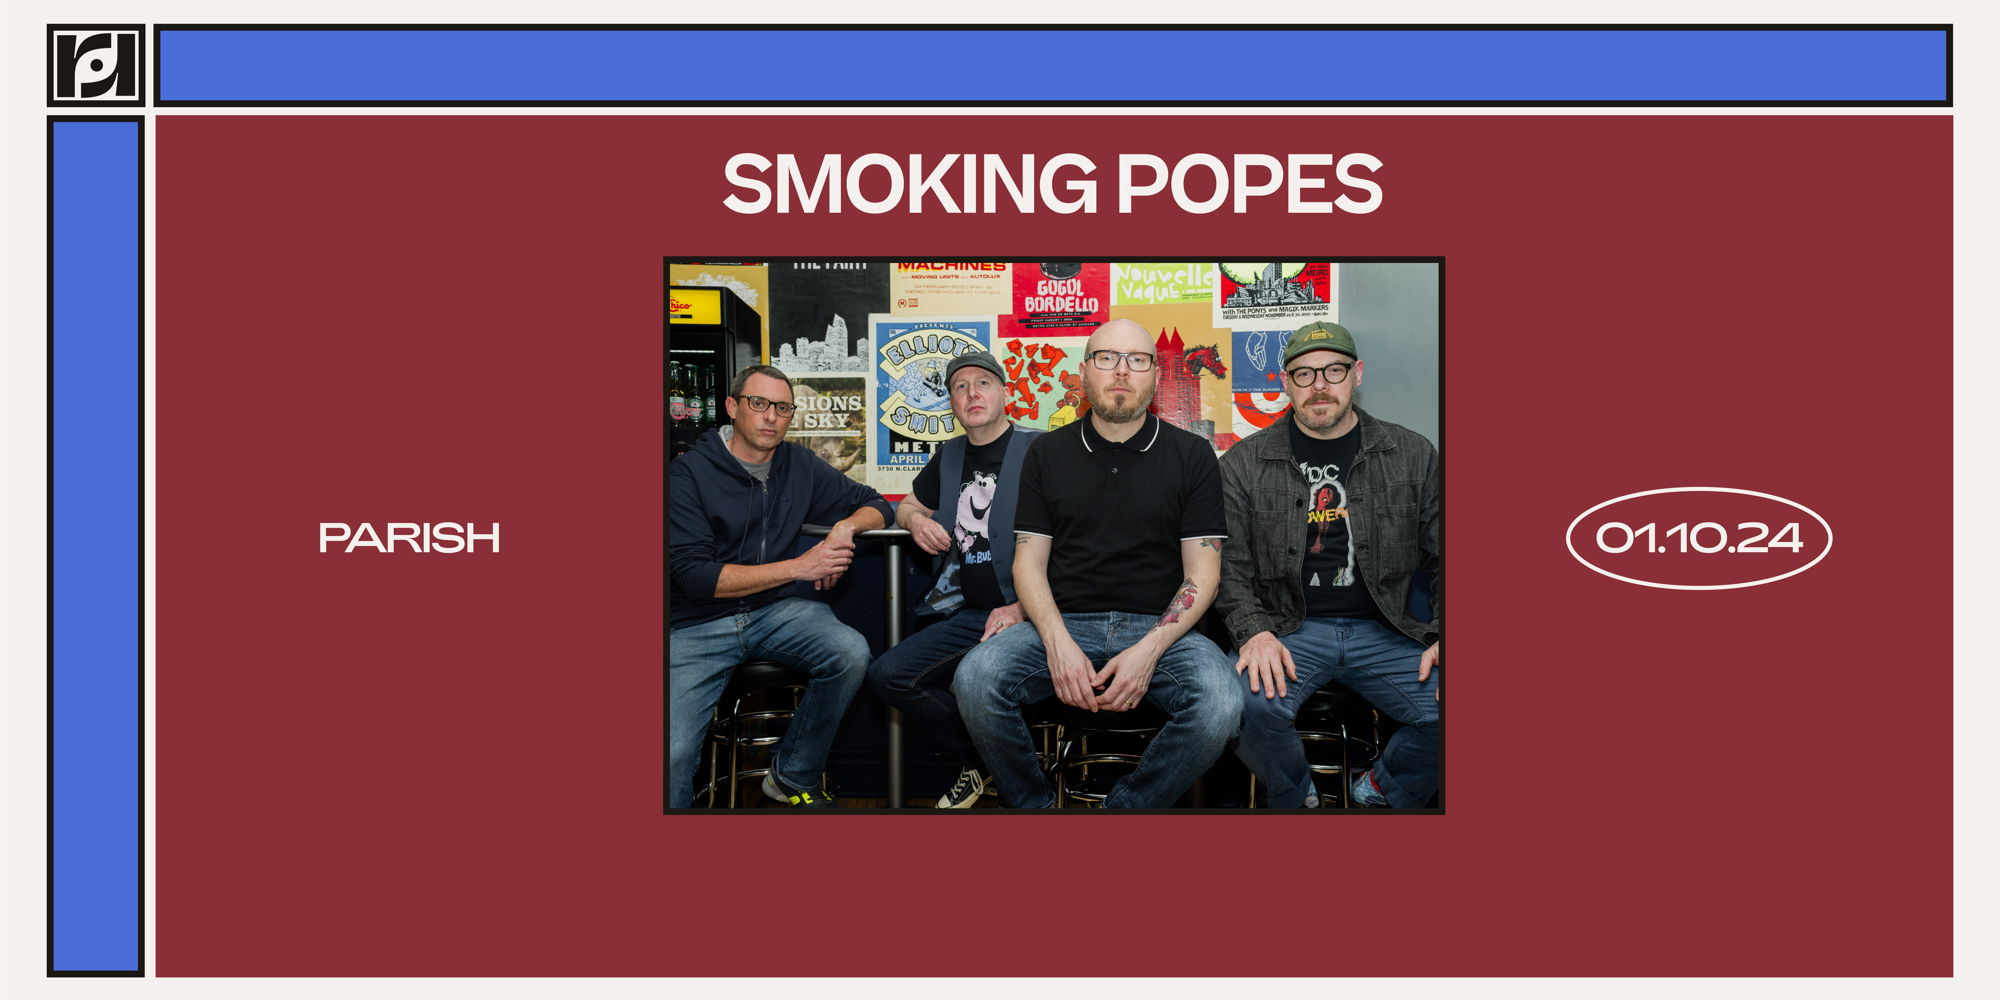 Resound Presents: Smoking Popes at Parish on 1/10 promotional image